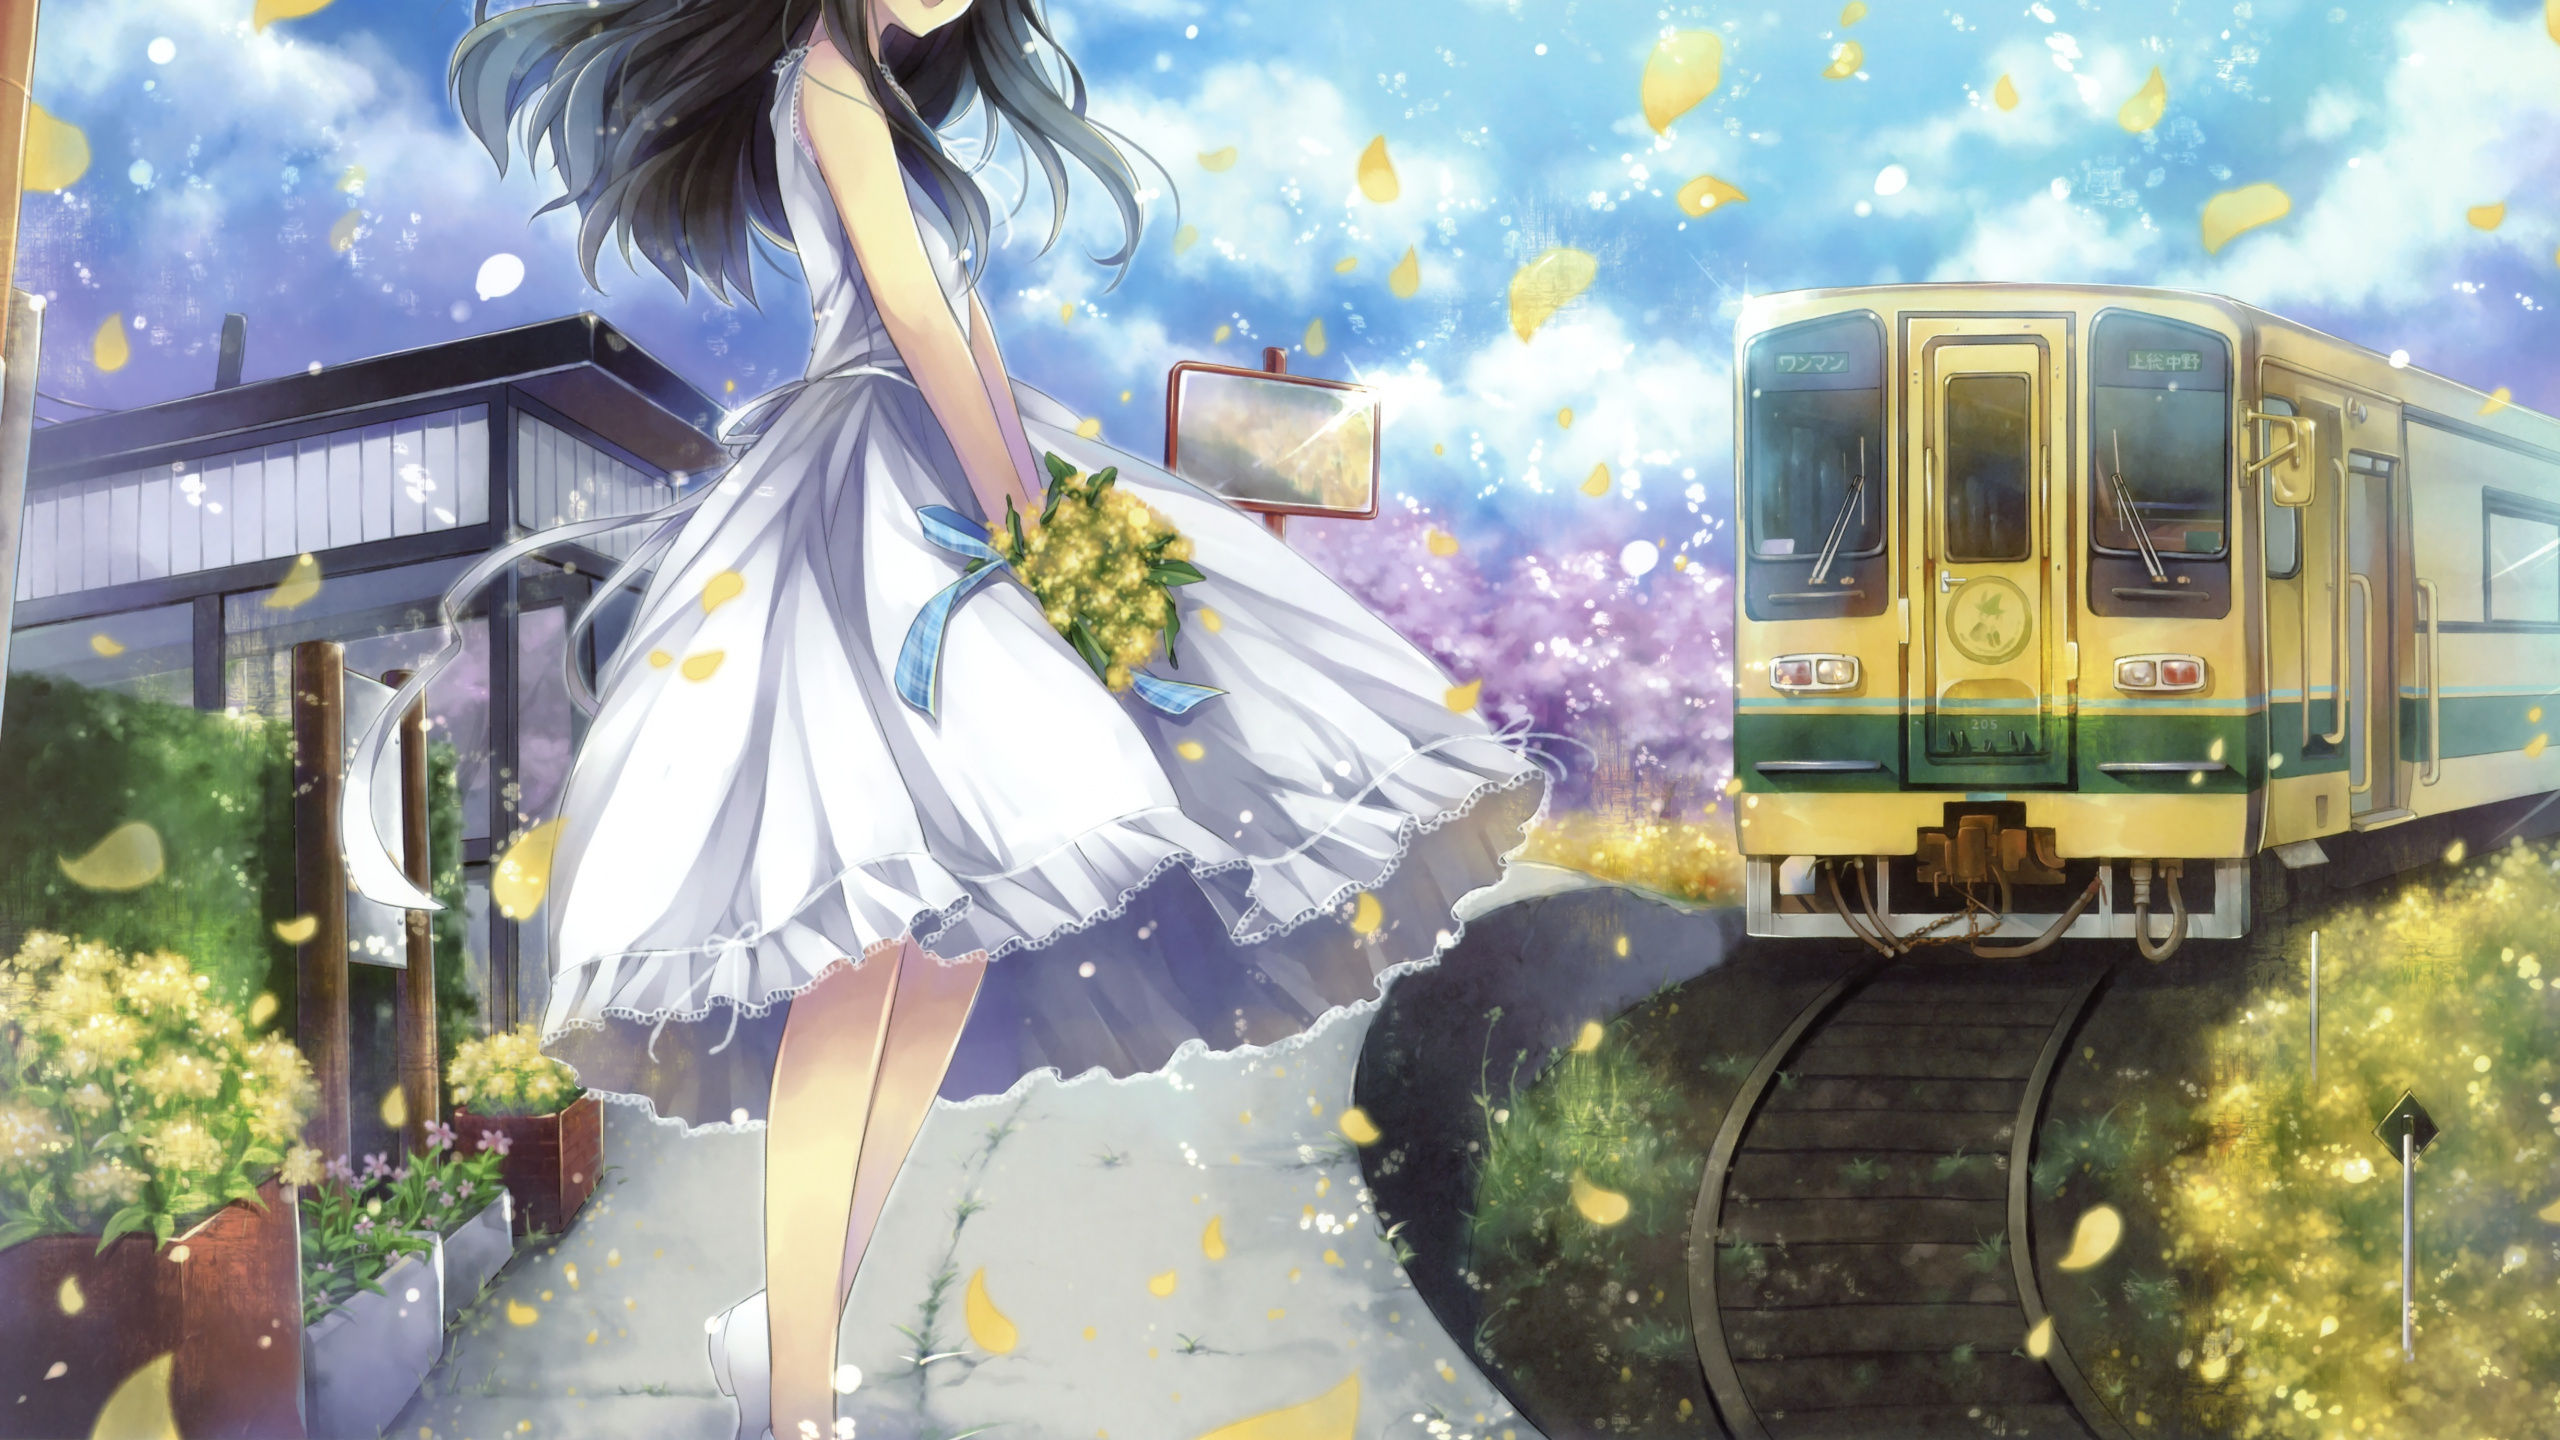 Anime Girl Summer Dress, Anime, Dress, Clothing, Train. Wallpaper in 2560x1440 Resolution